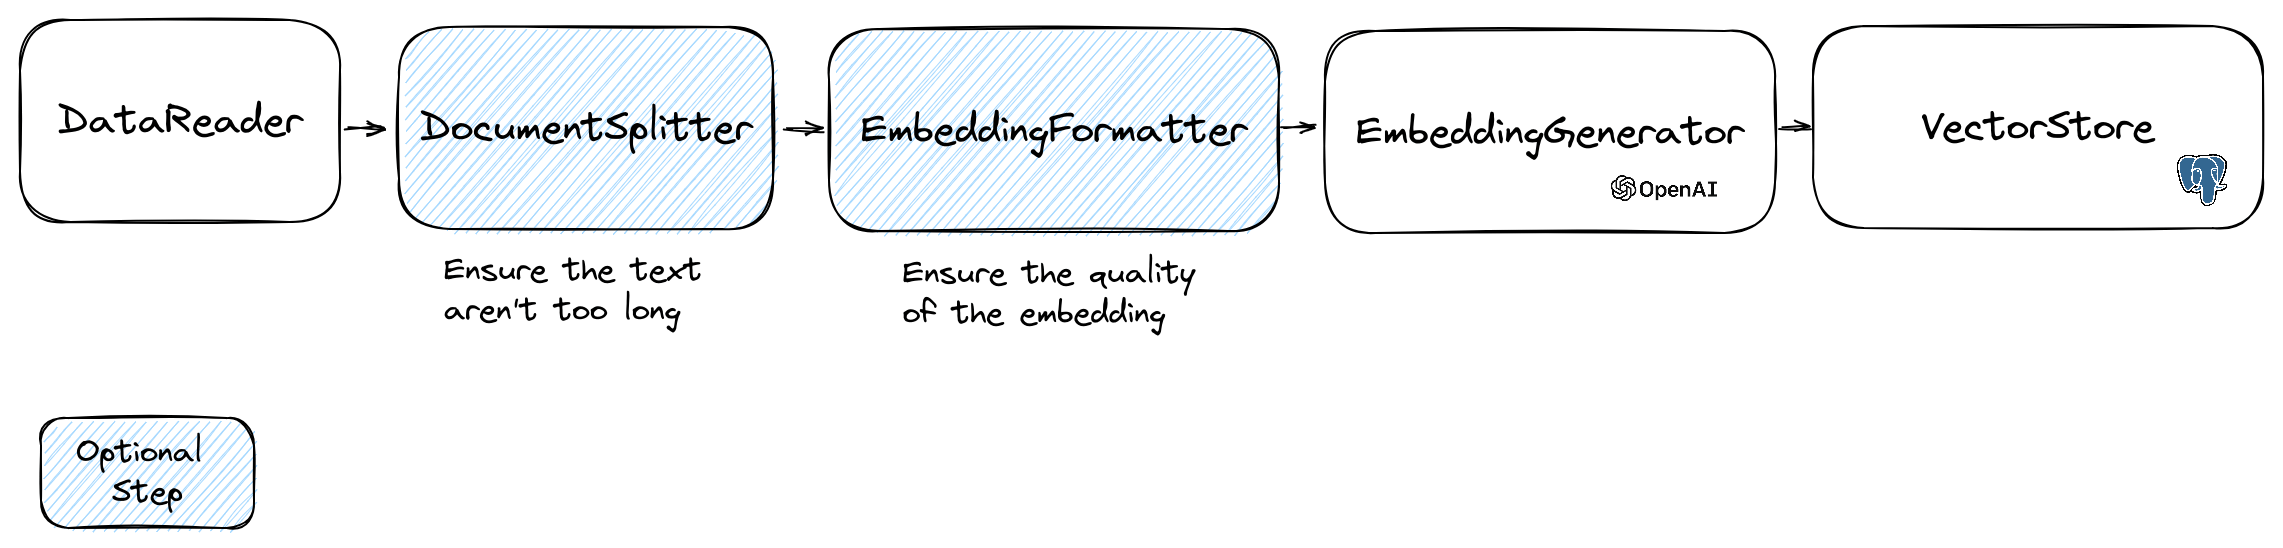 embeddings-flow.png